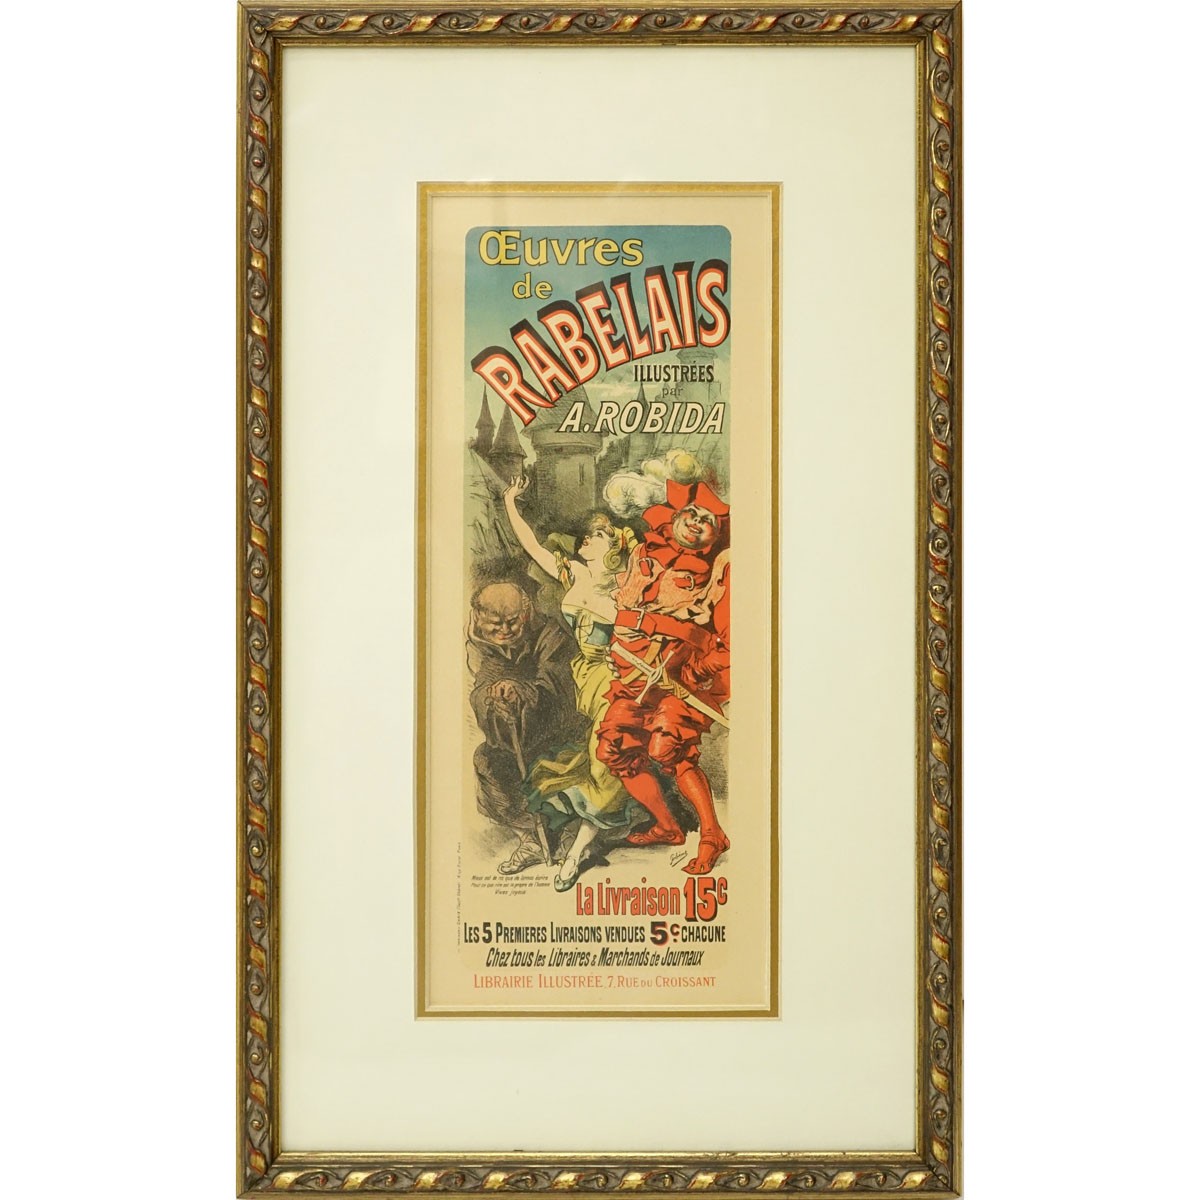 After: Jules Chéret, French (1836-1932) "Oeuvres de Rabelais" Lithograph Poster, 'Les Maîtres' Series. Good condition.